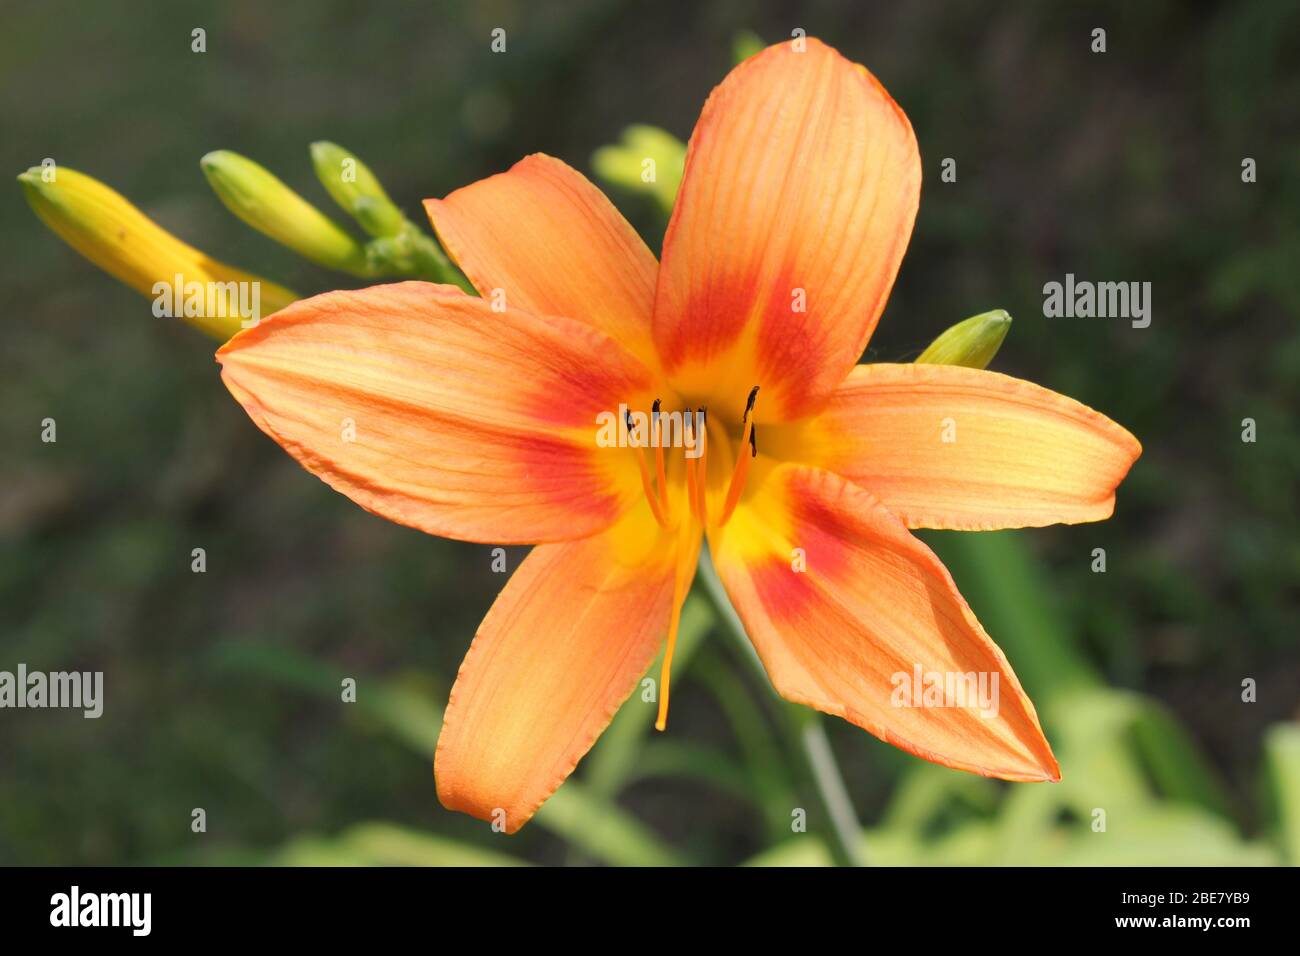 Lirios naranjas fotografías e imágenes de alta resolución - Alamy